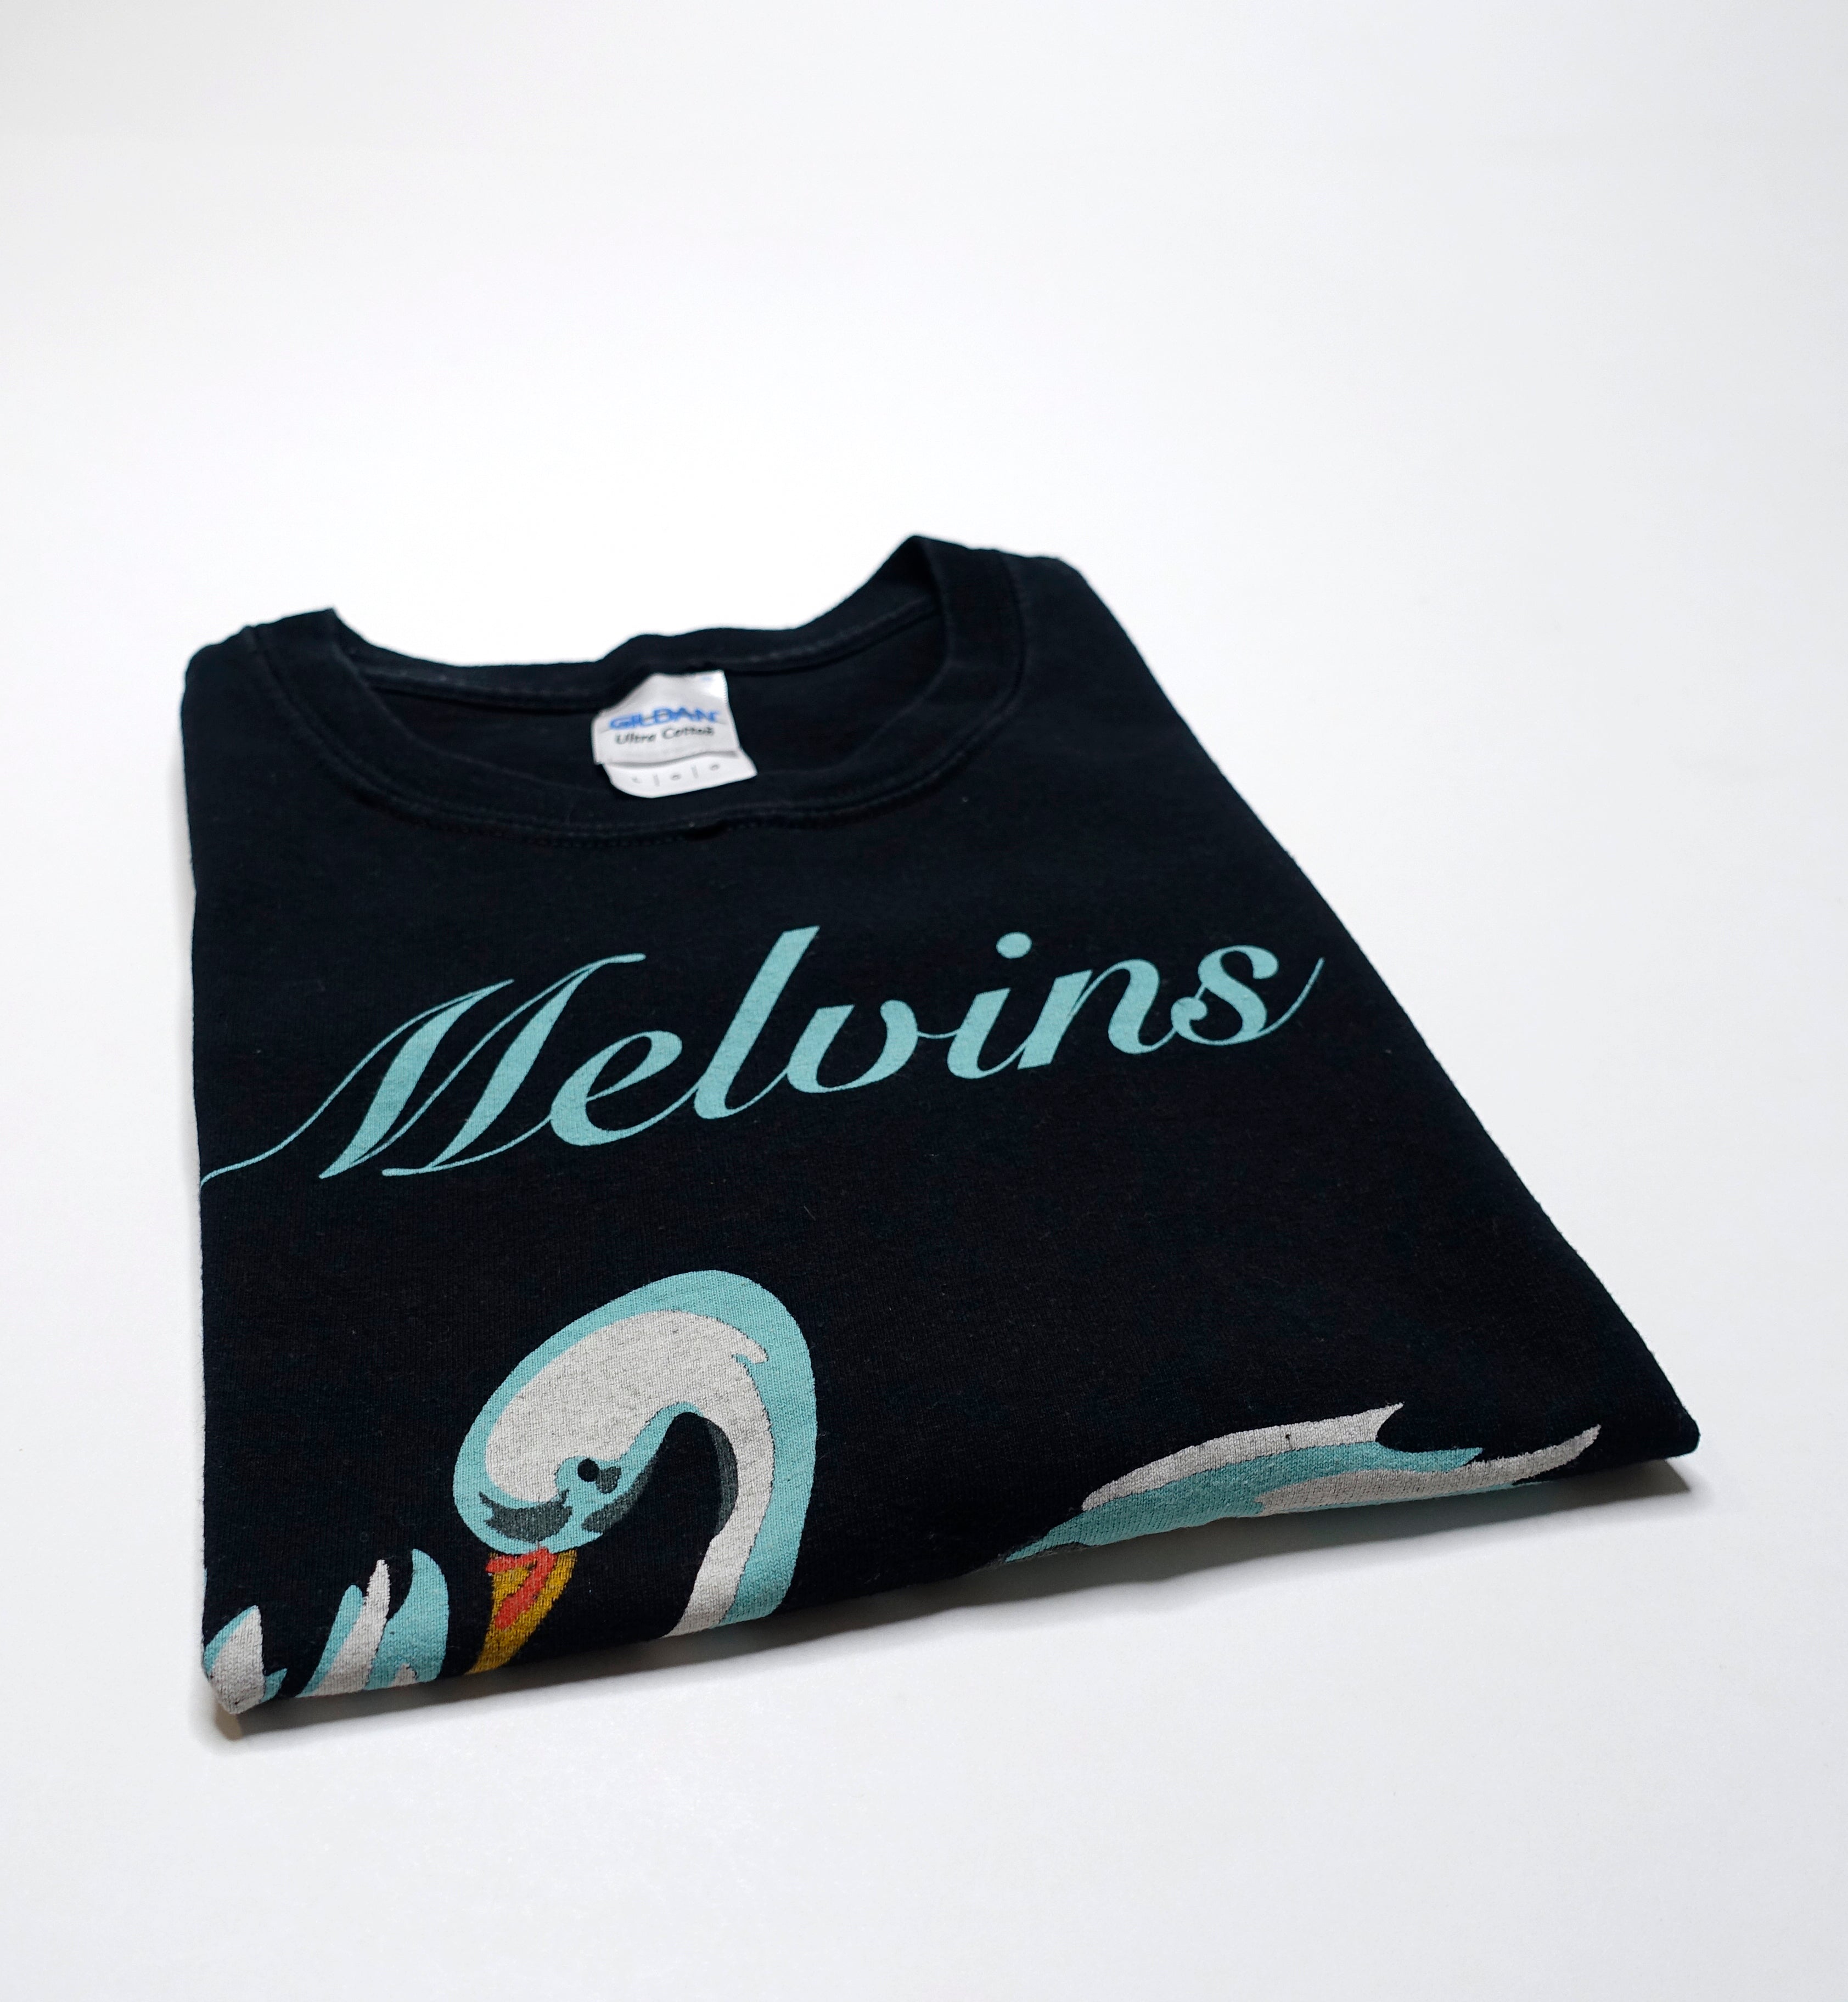 Melvins ‎– Stoner Witch 00's Shirt Size Large